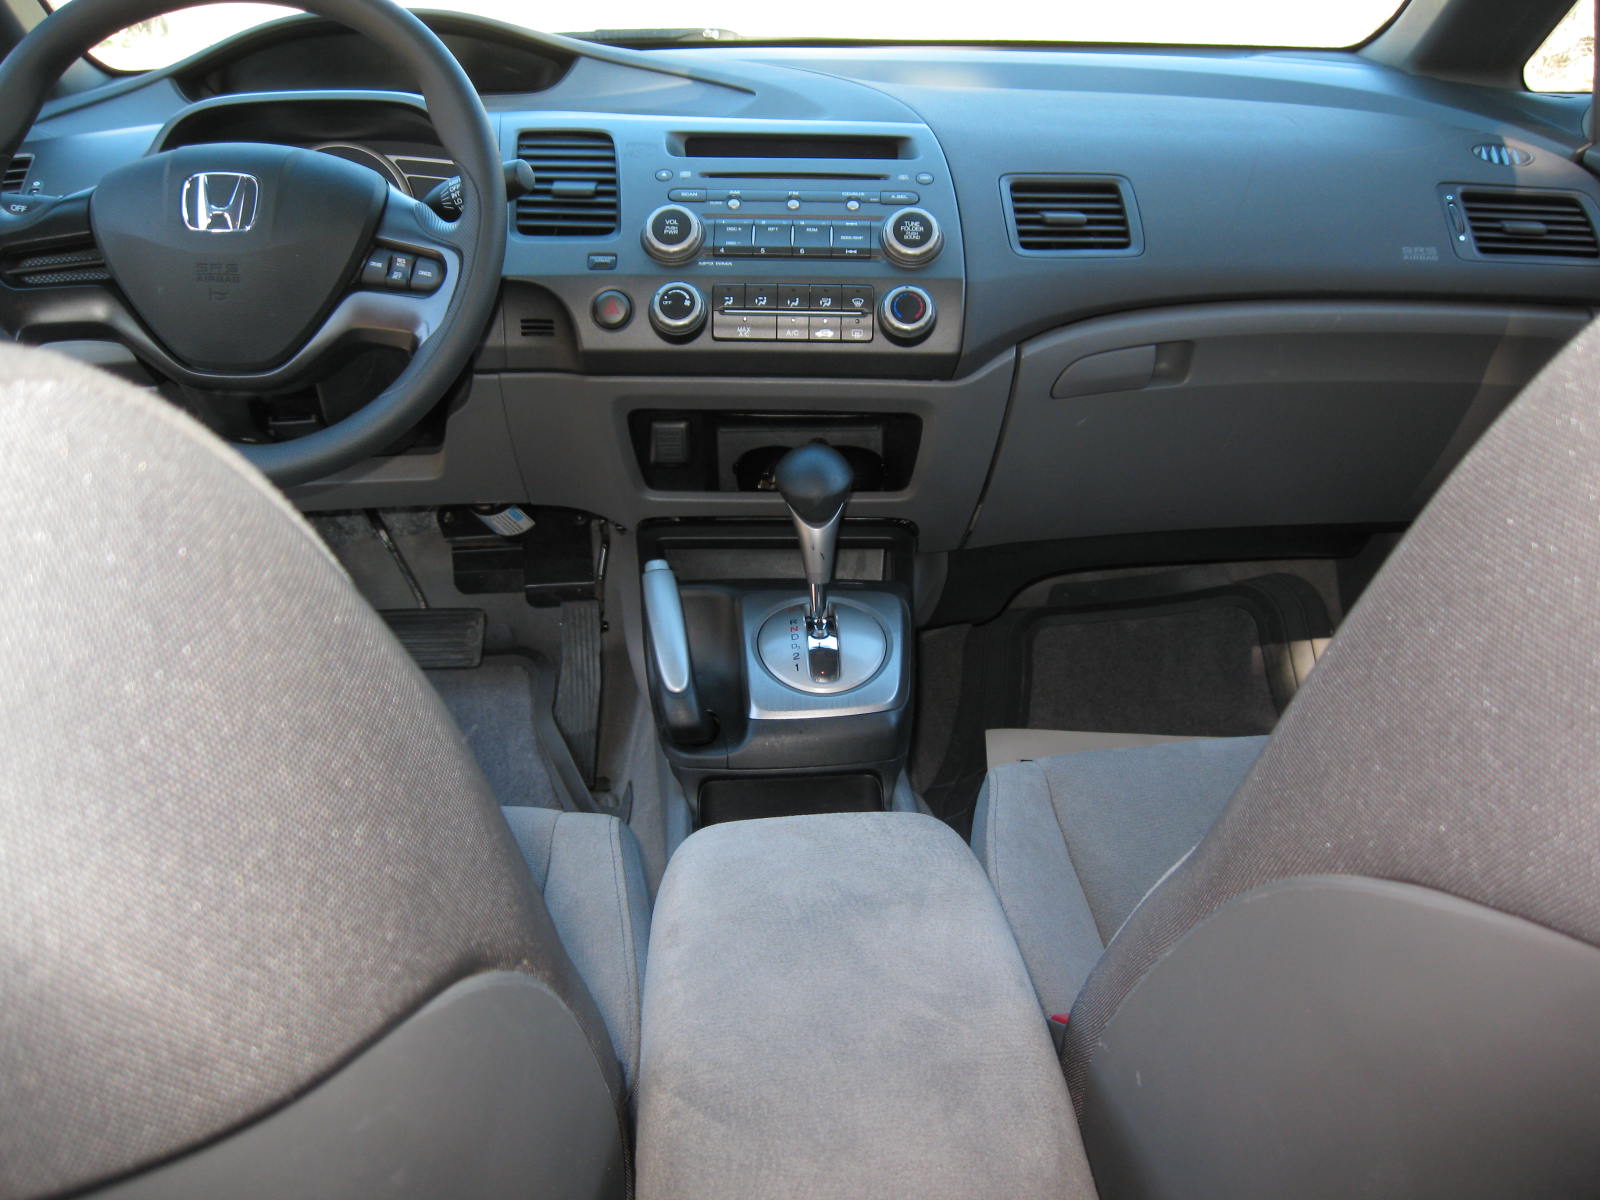 2006 Honda civic lx coupe interior #1